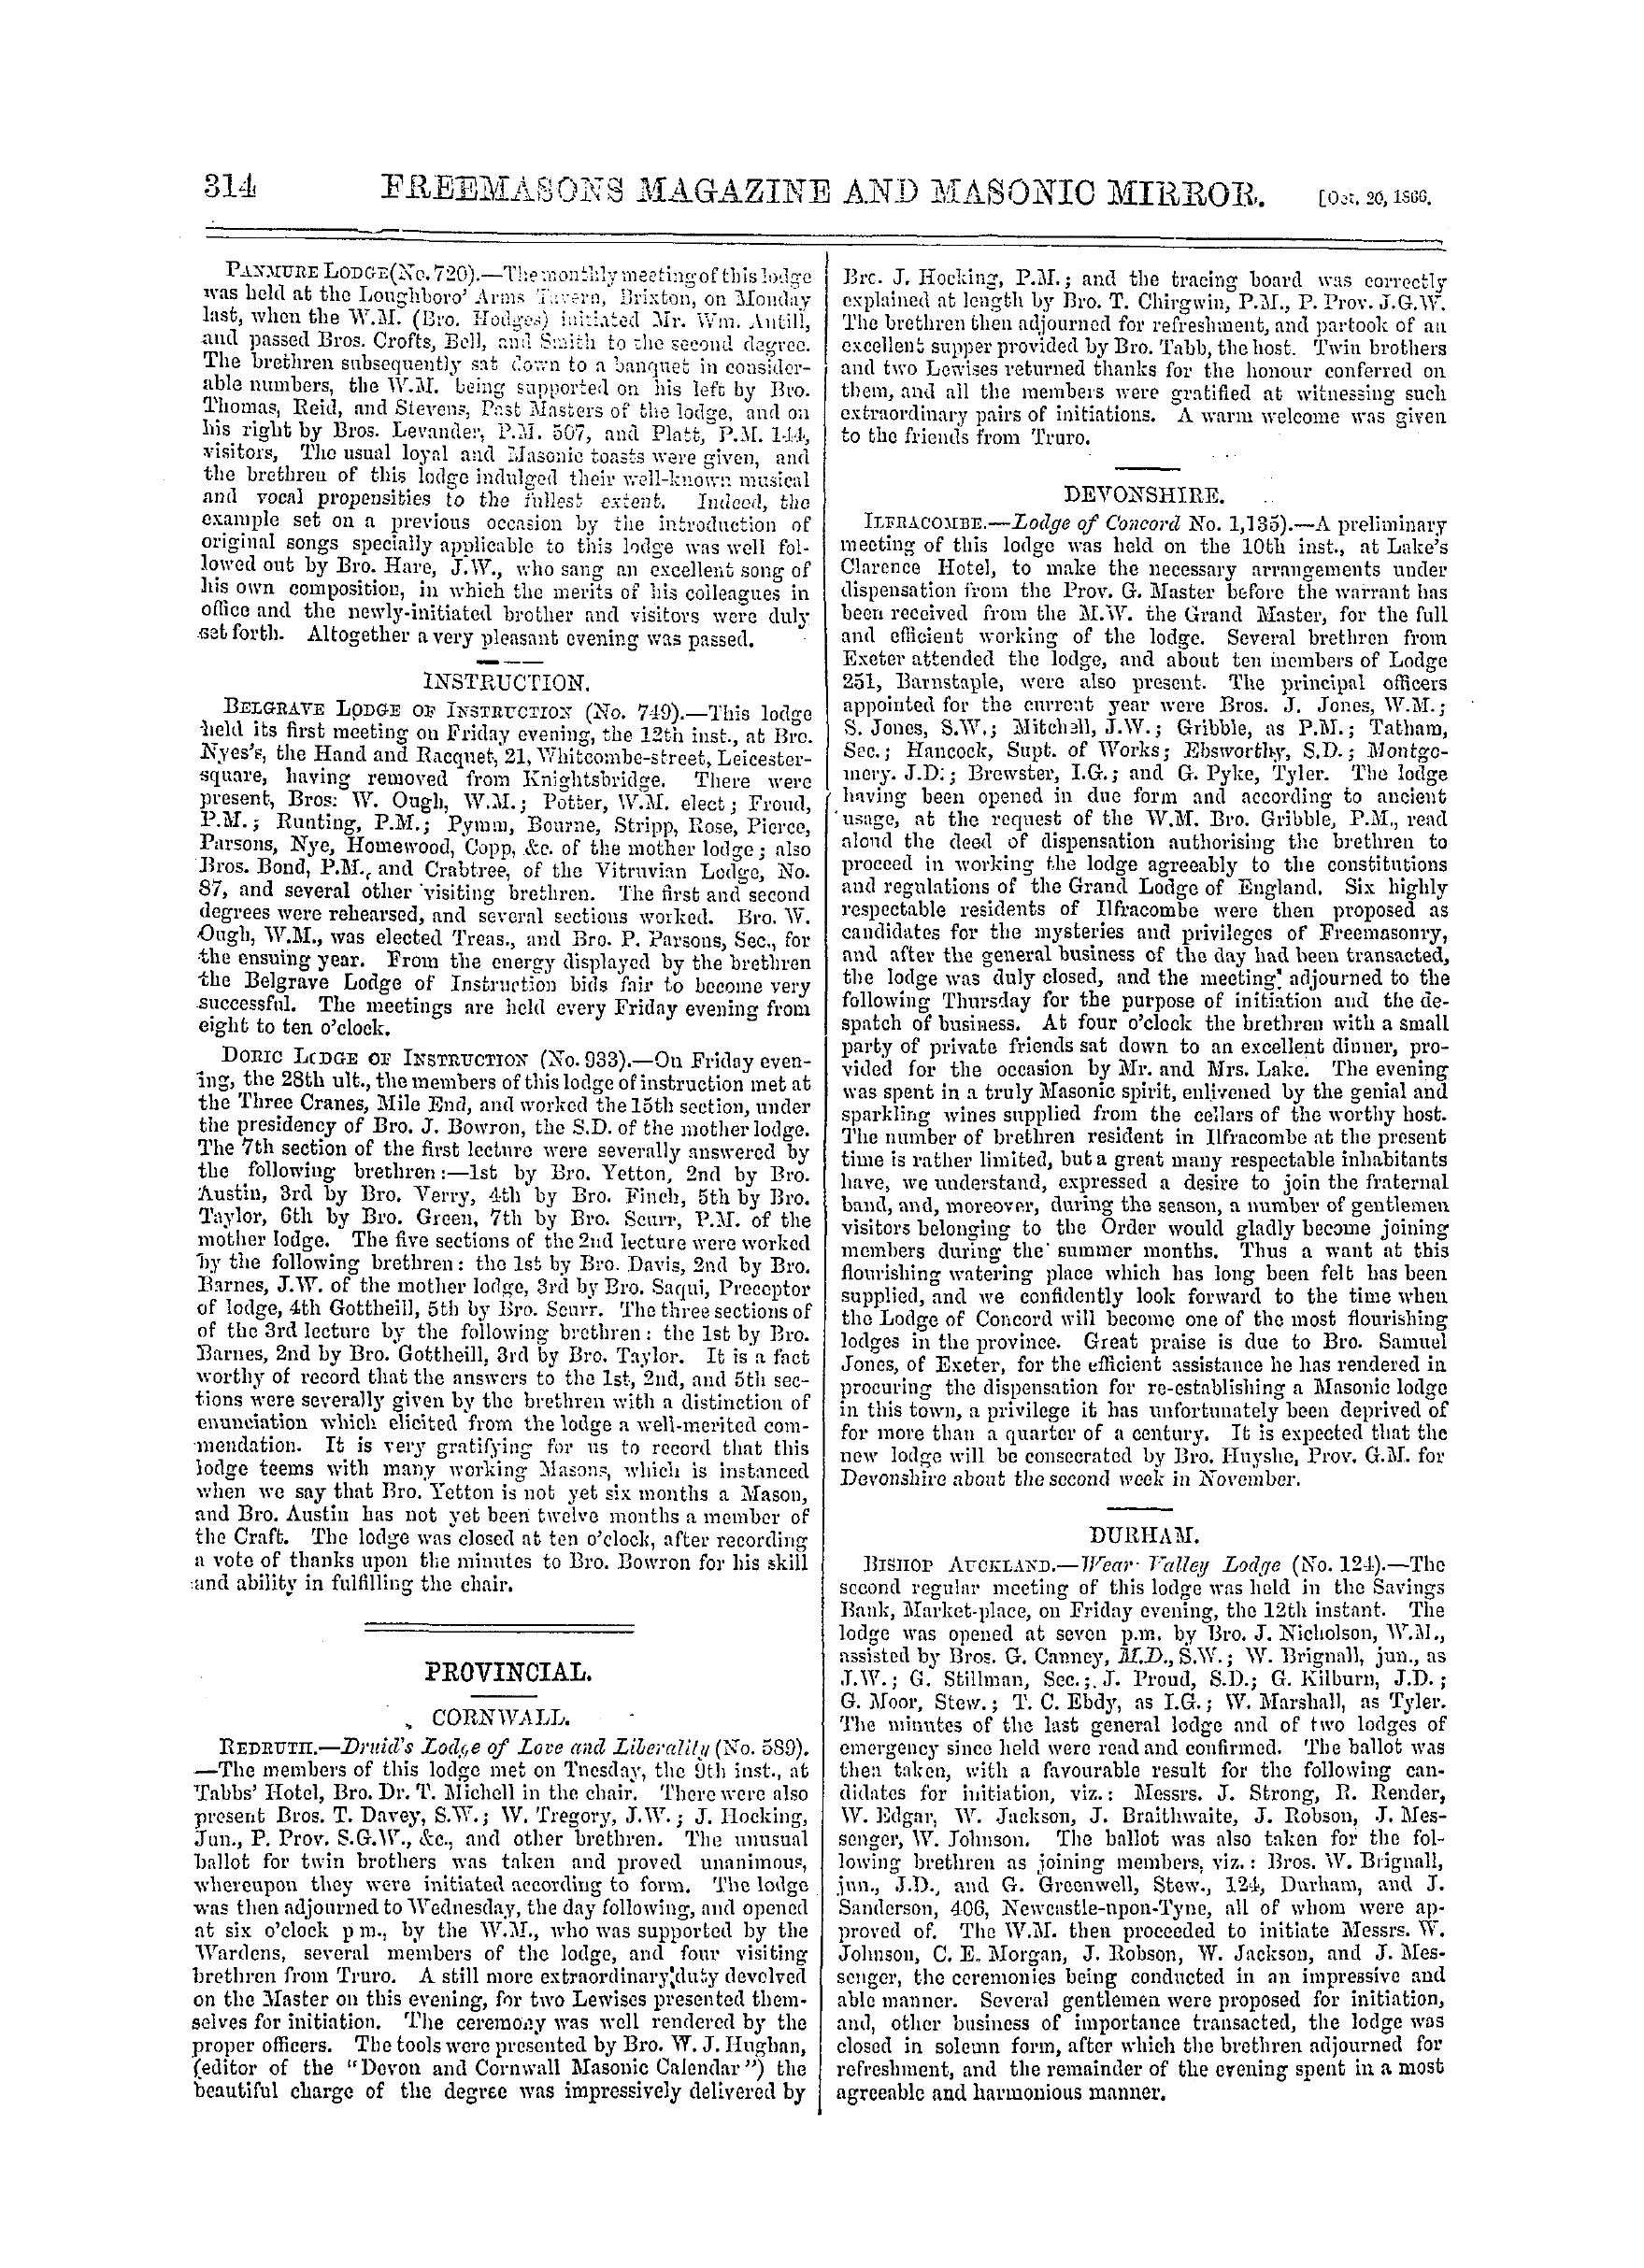 The Freemasons' Monthly Magazine: 1866-10-20 - Provincial.